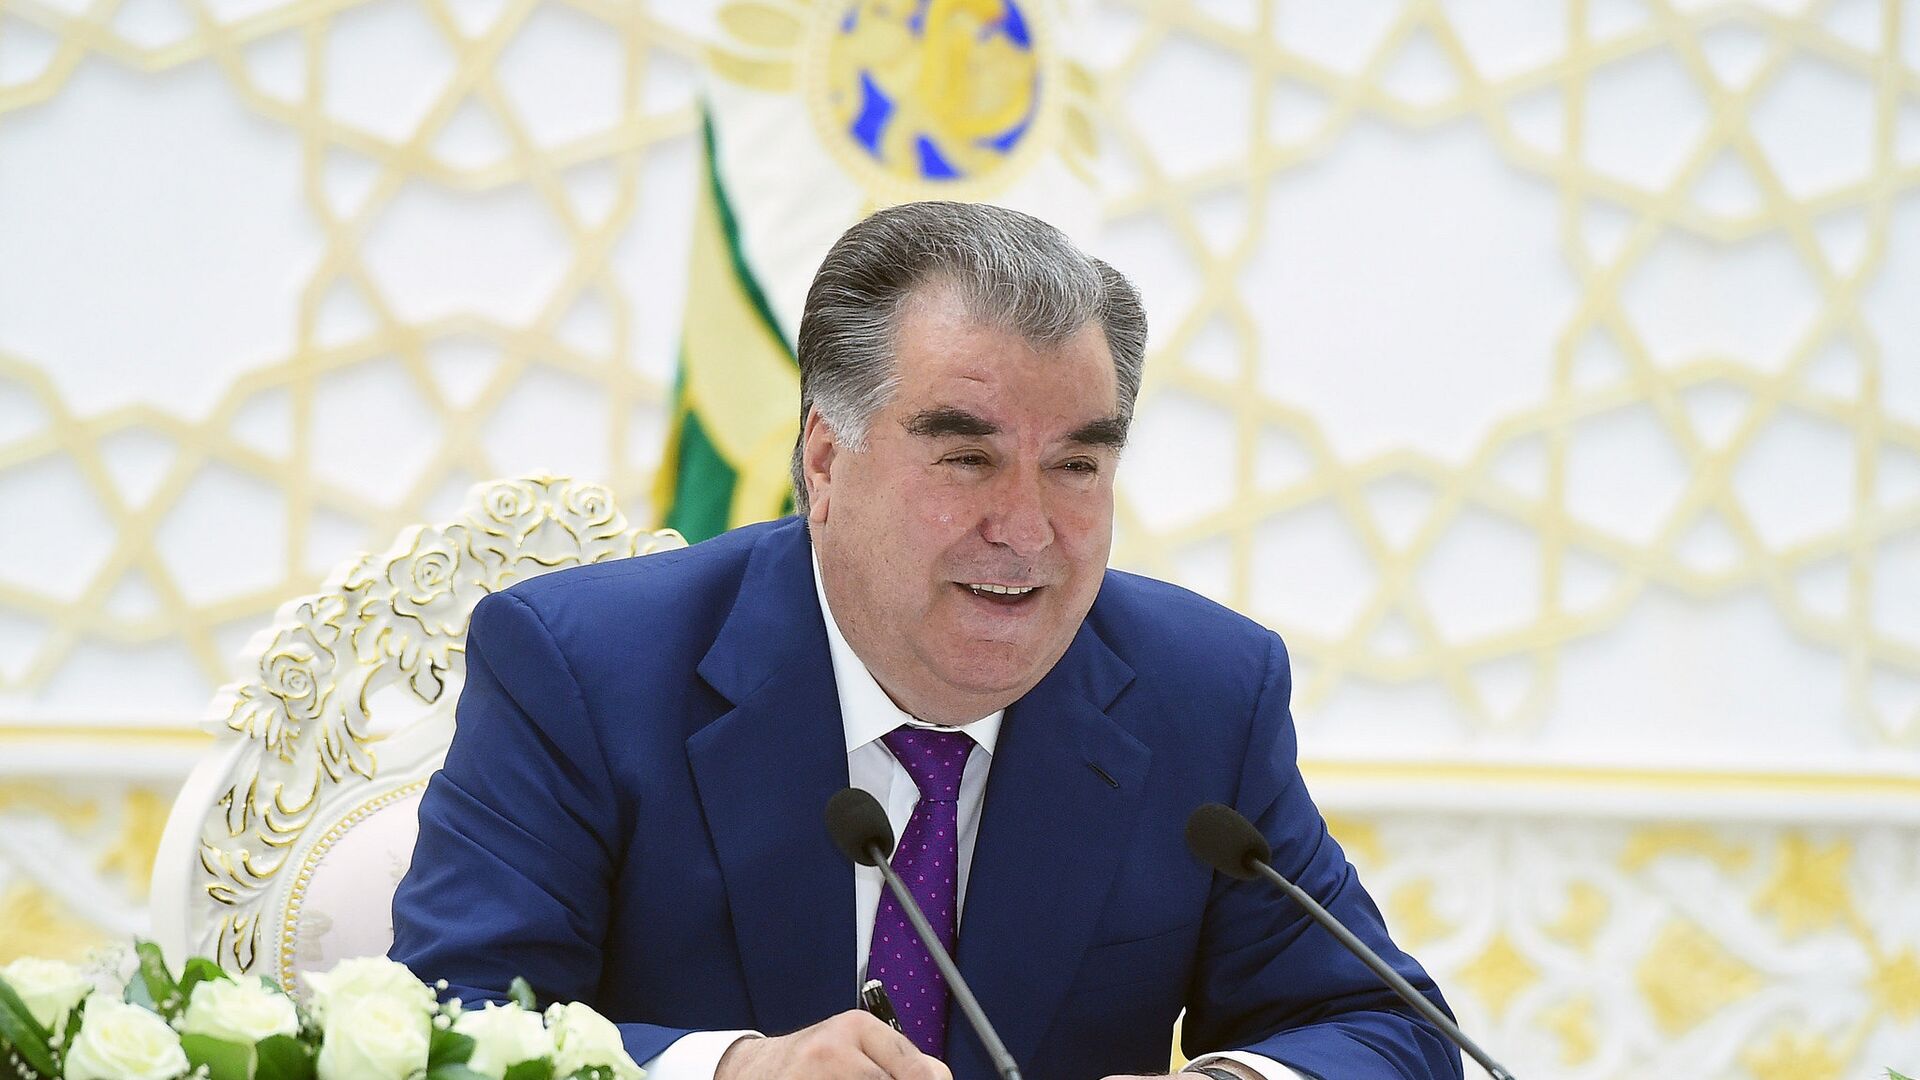 Президент Республики Таджикистан Эмомали Рахмон, архивное фото - Sputnik Узбекистан, 1920, 16.11.2021